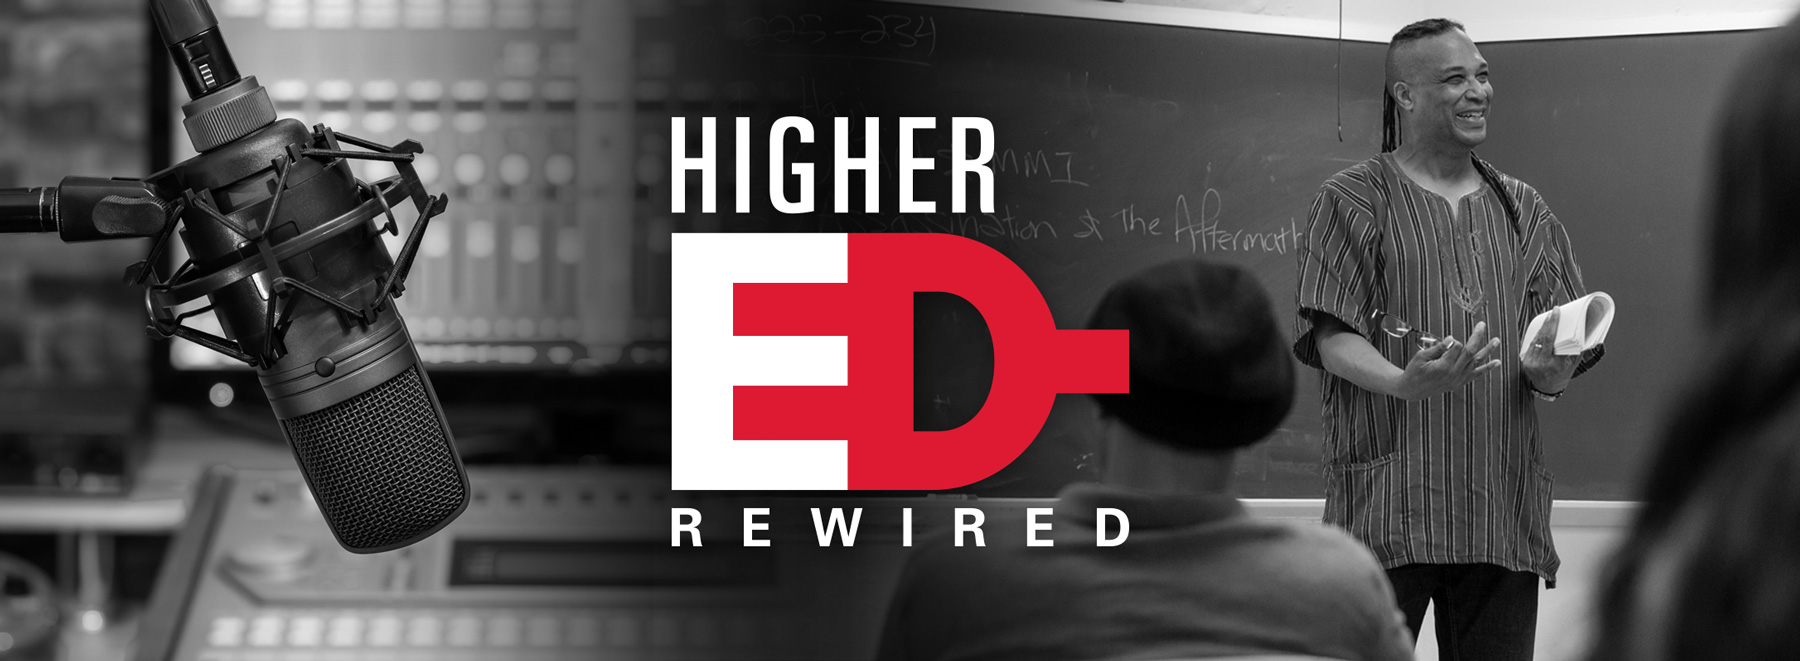 Higher Ed Rewired